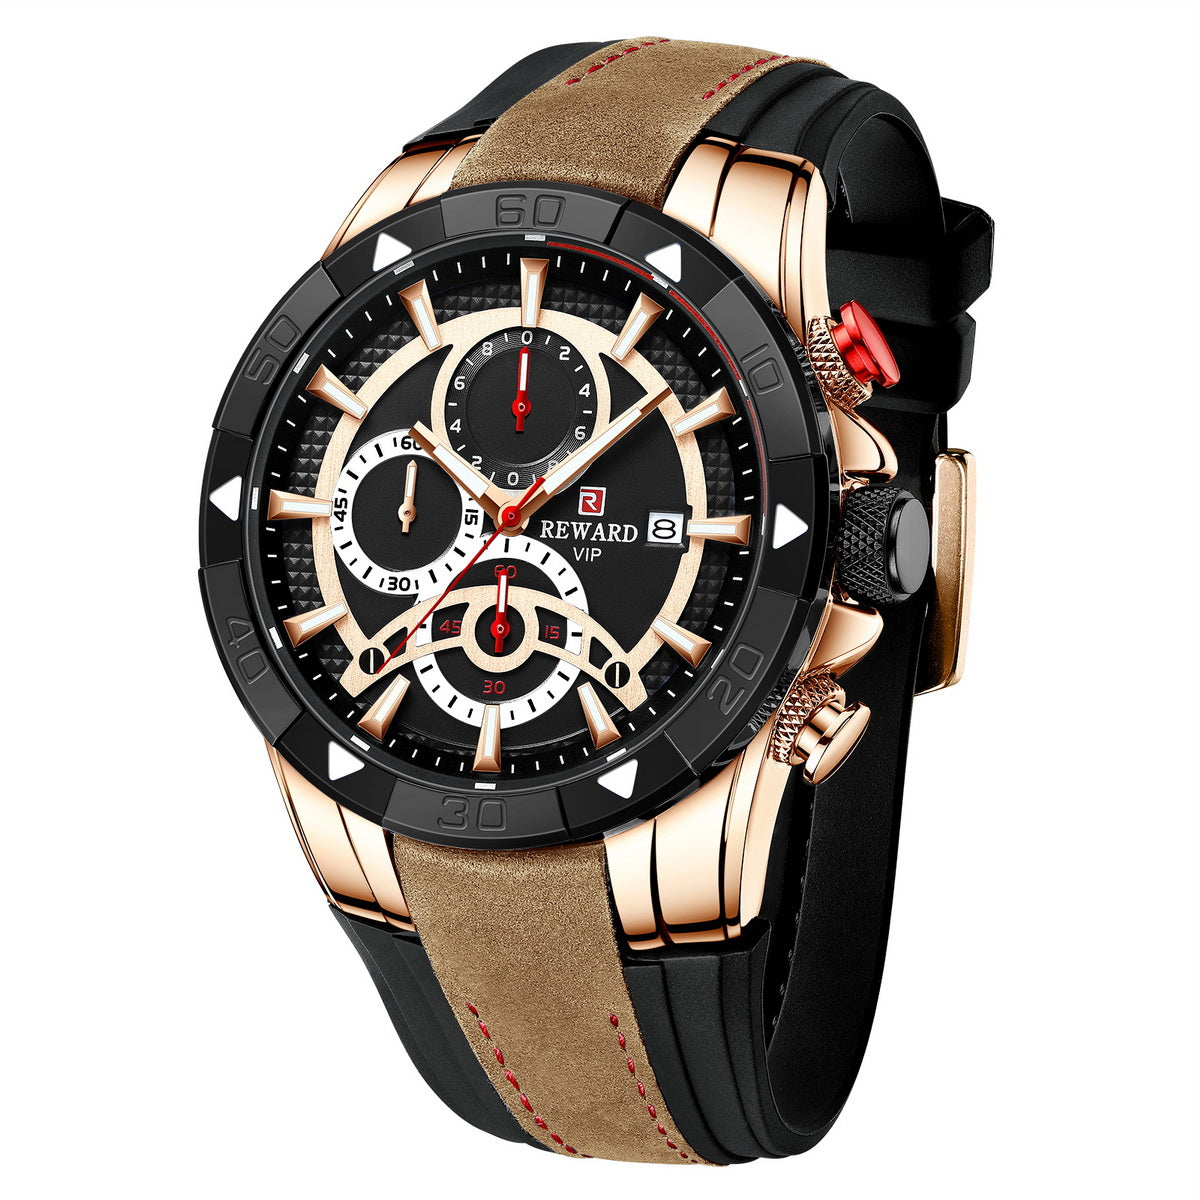 Calypso Multifunction Watch Silicone, Black Brown colour